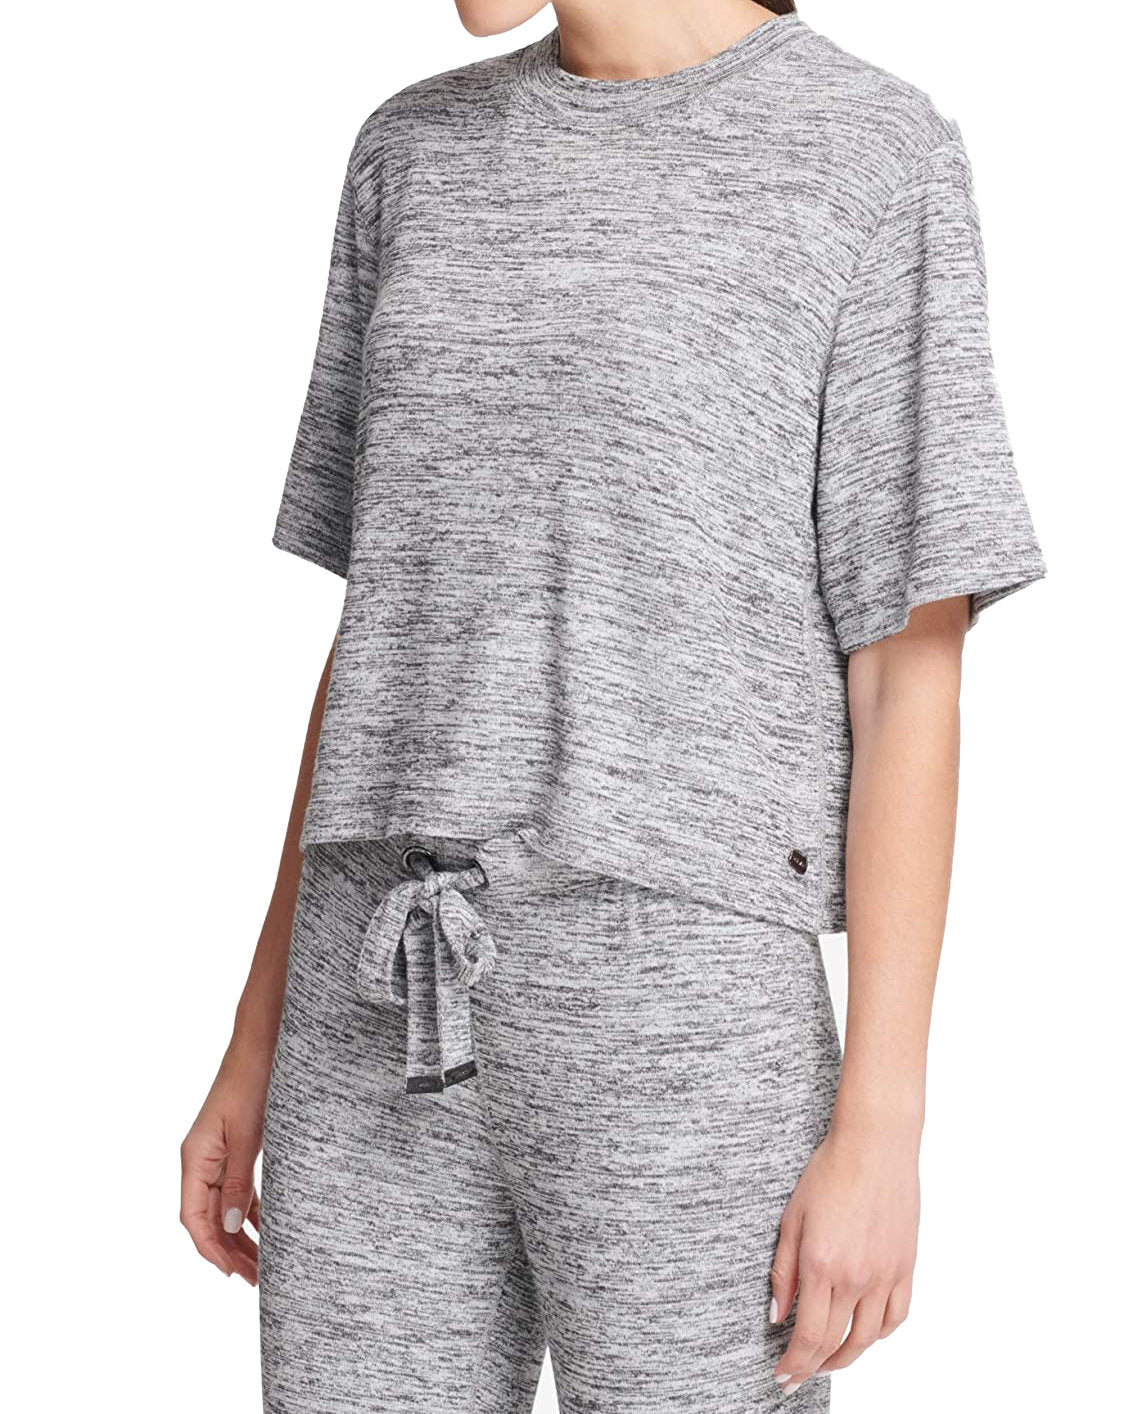 DKNY Womens Cropped Short Sleeve Sweatshirt